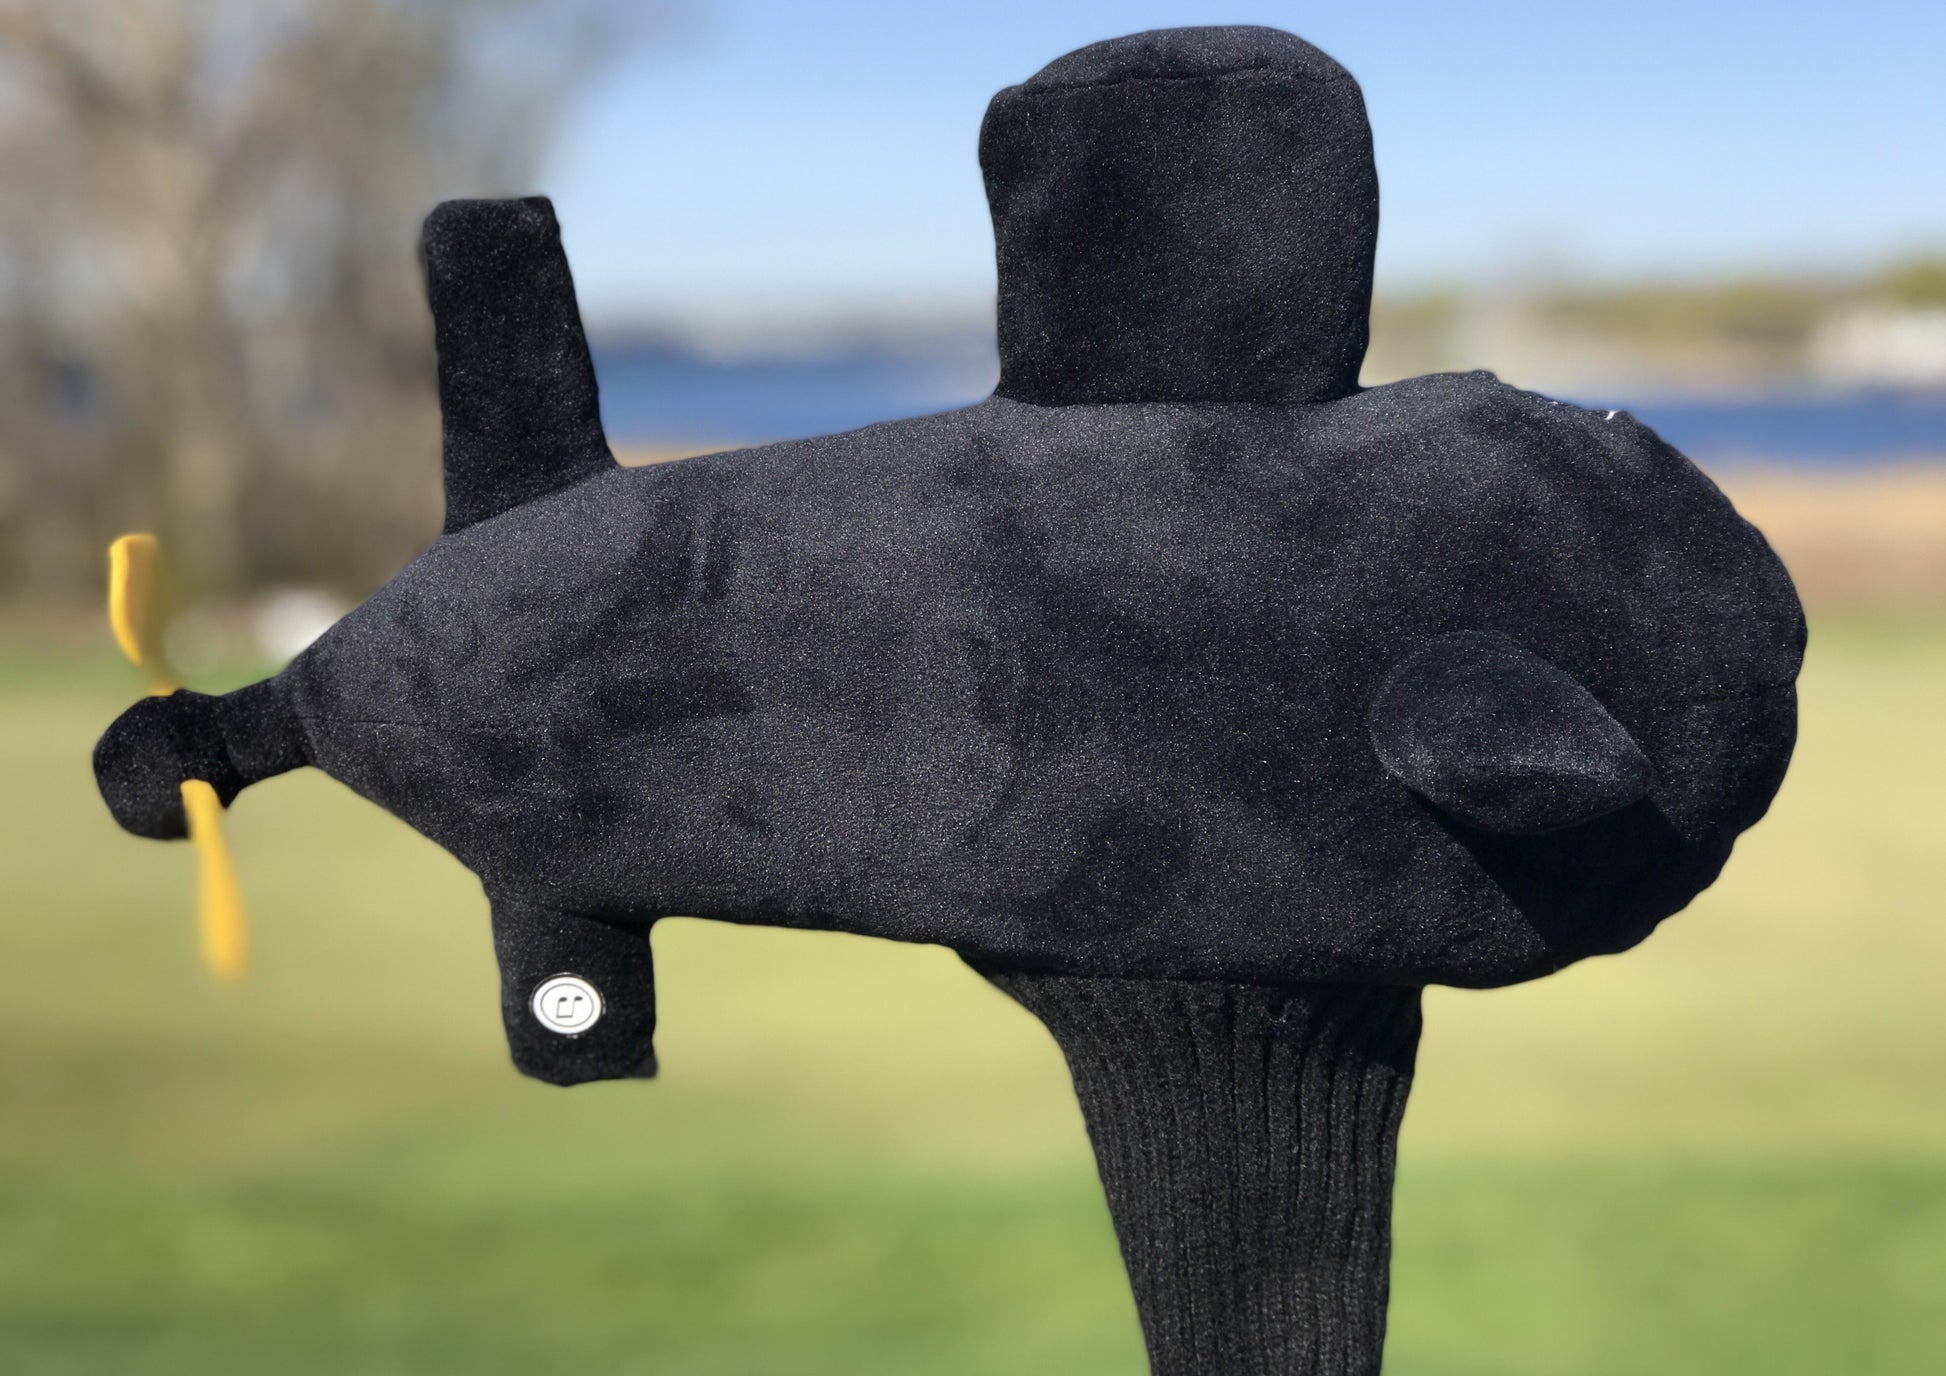 Golf ball gift pack – Submarinegolf